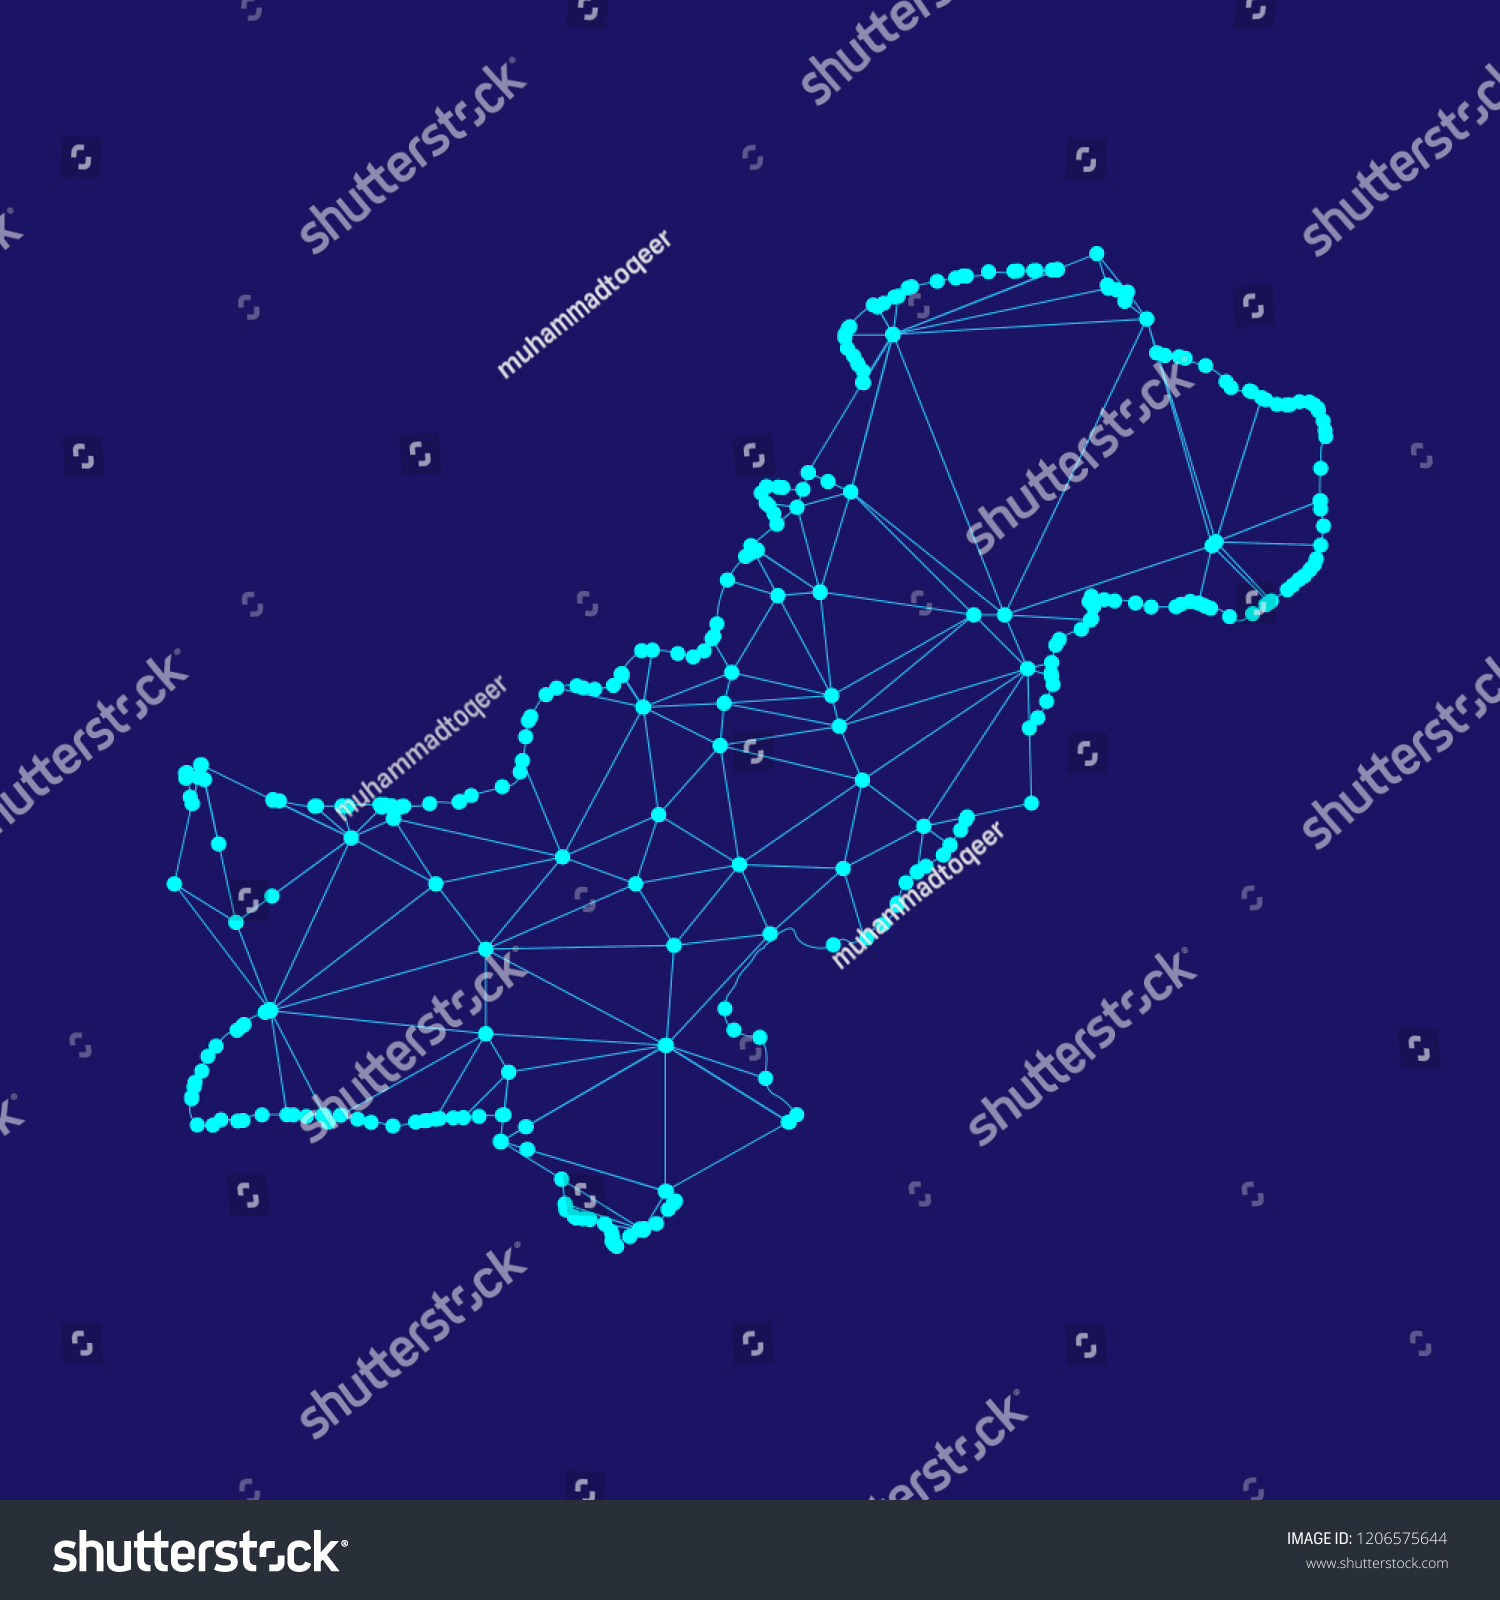 Pakistan Map Networking  Night View
 #1206575644